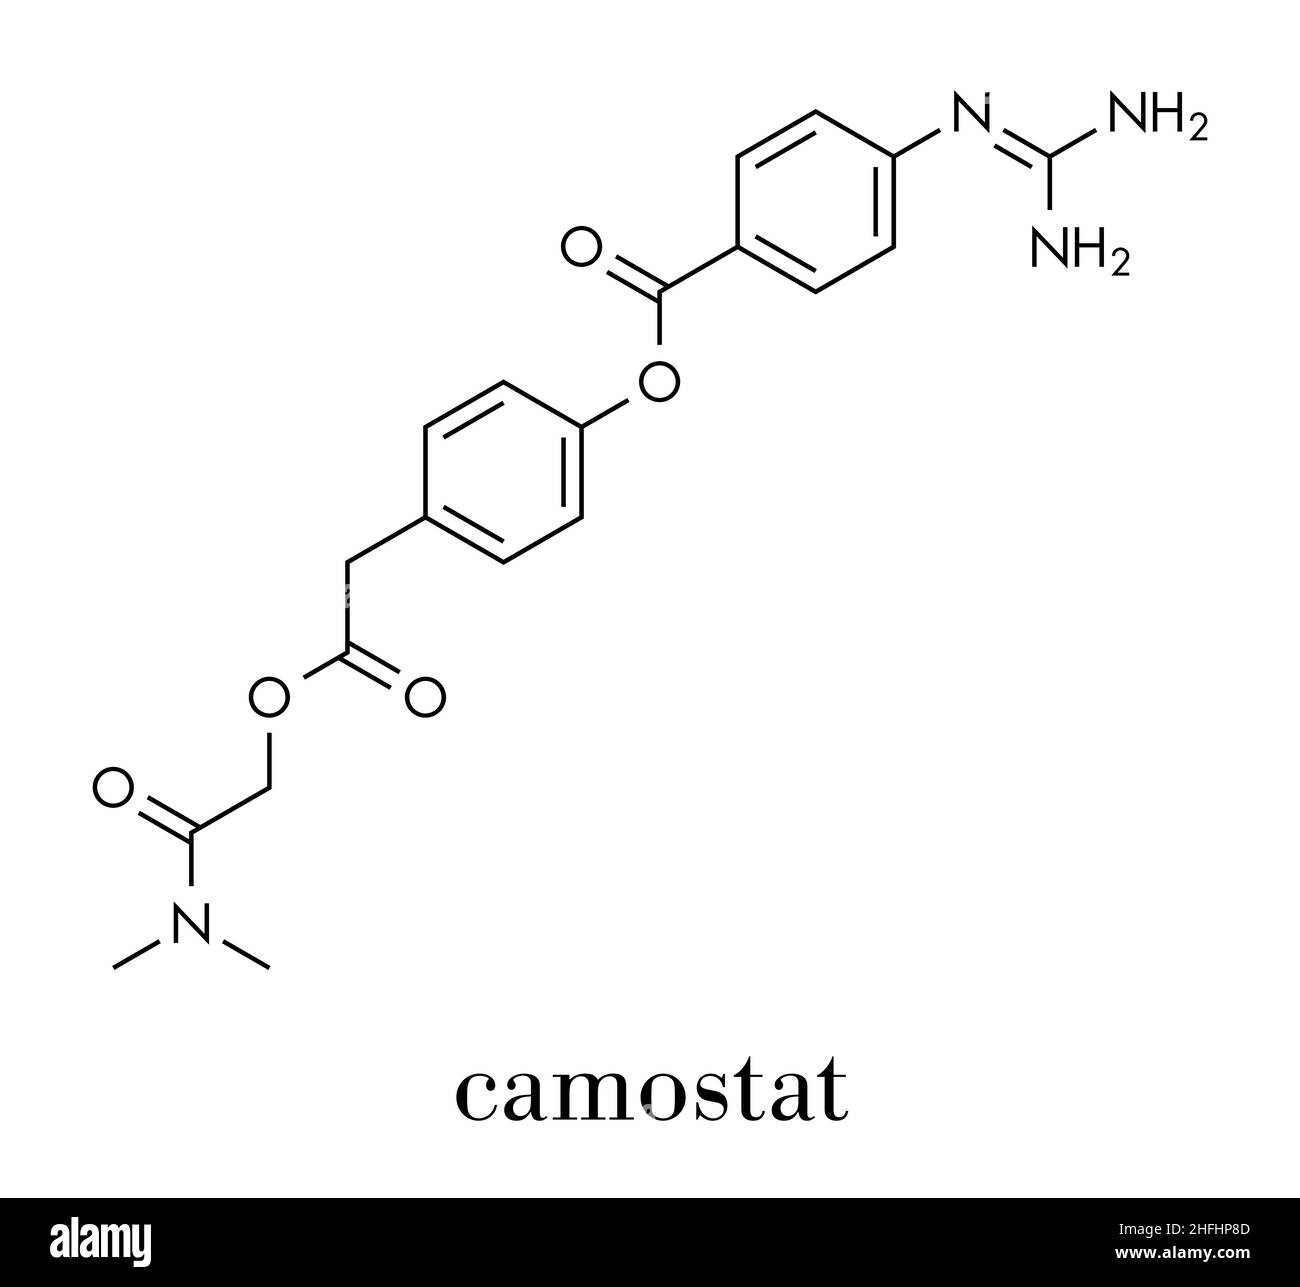 Camostat drug molecule. Serine protease inhibitor, investigated for treatment of Covid-19. Skeletal formula. Stock Vector